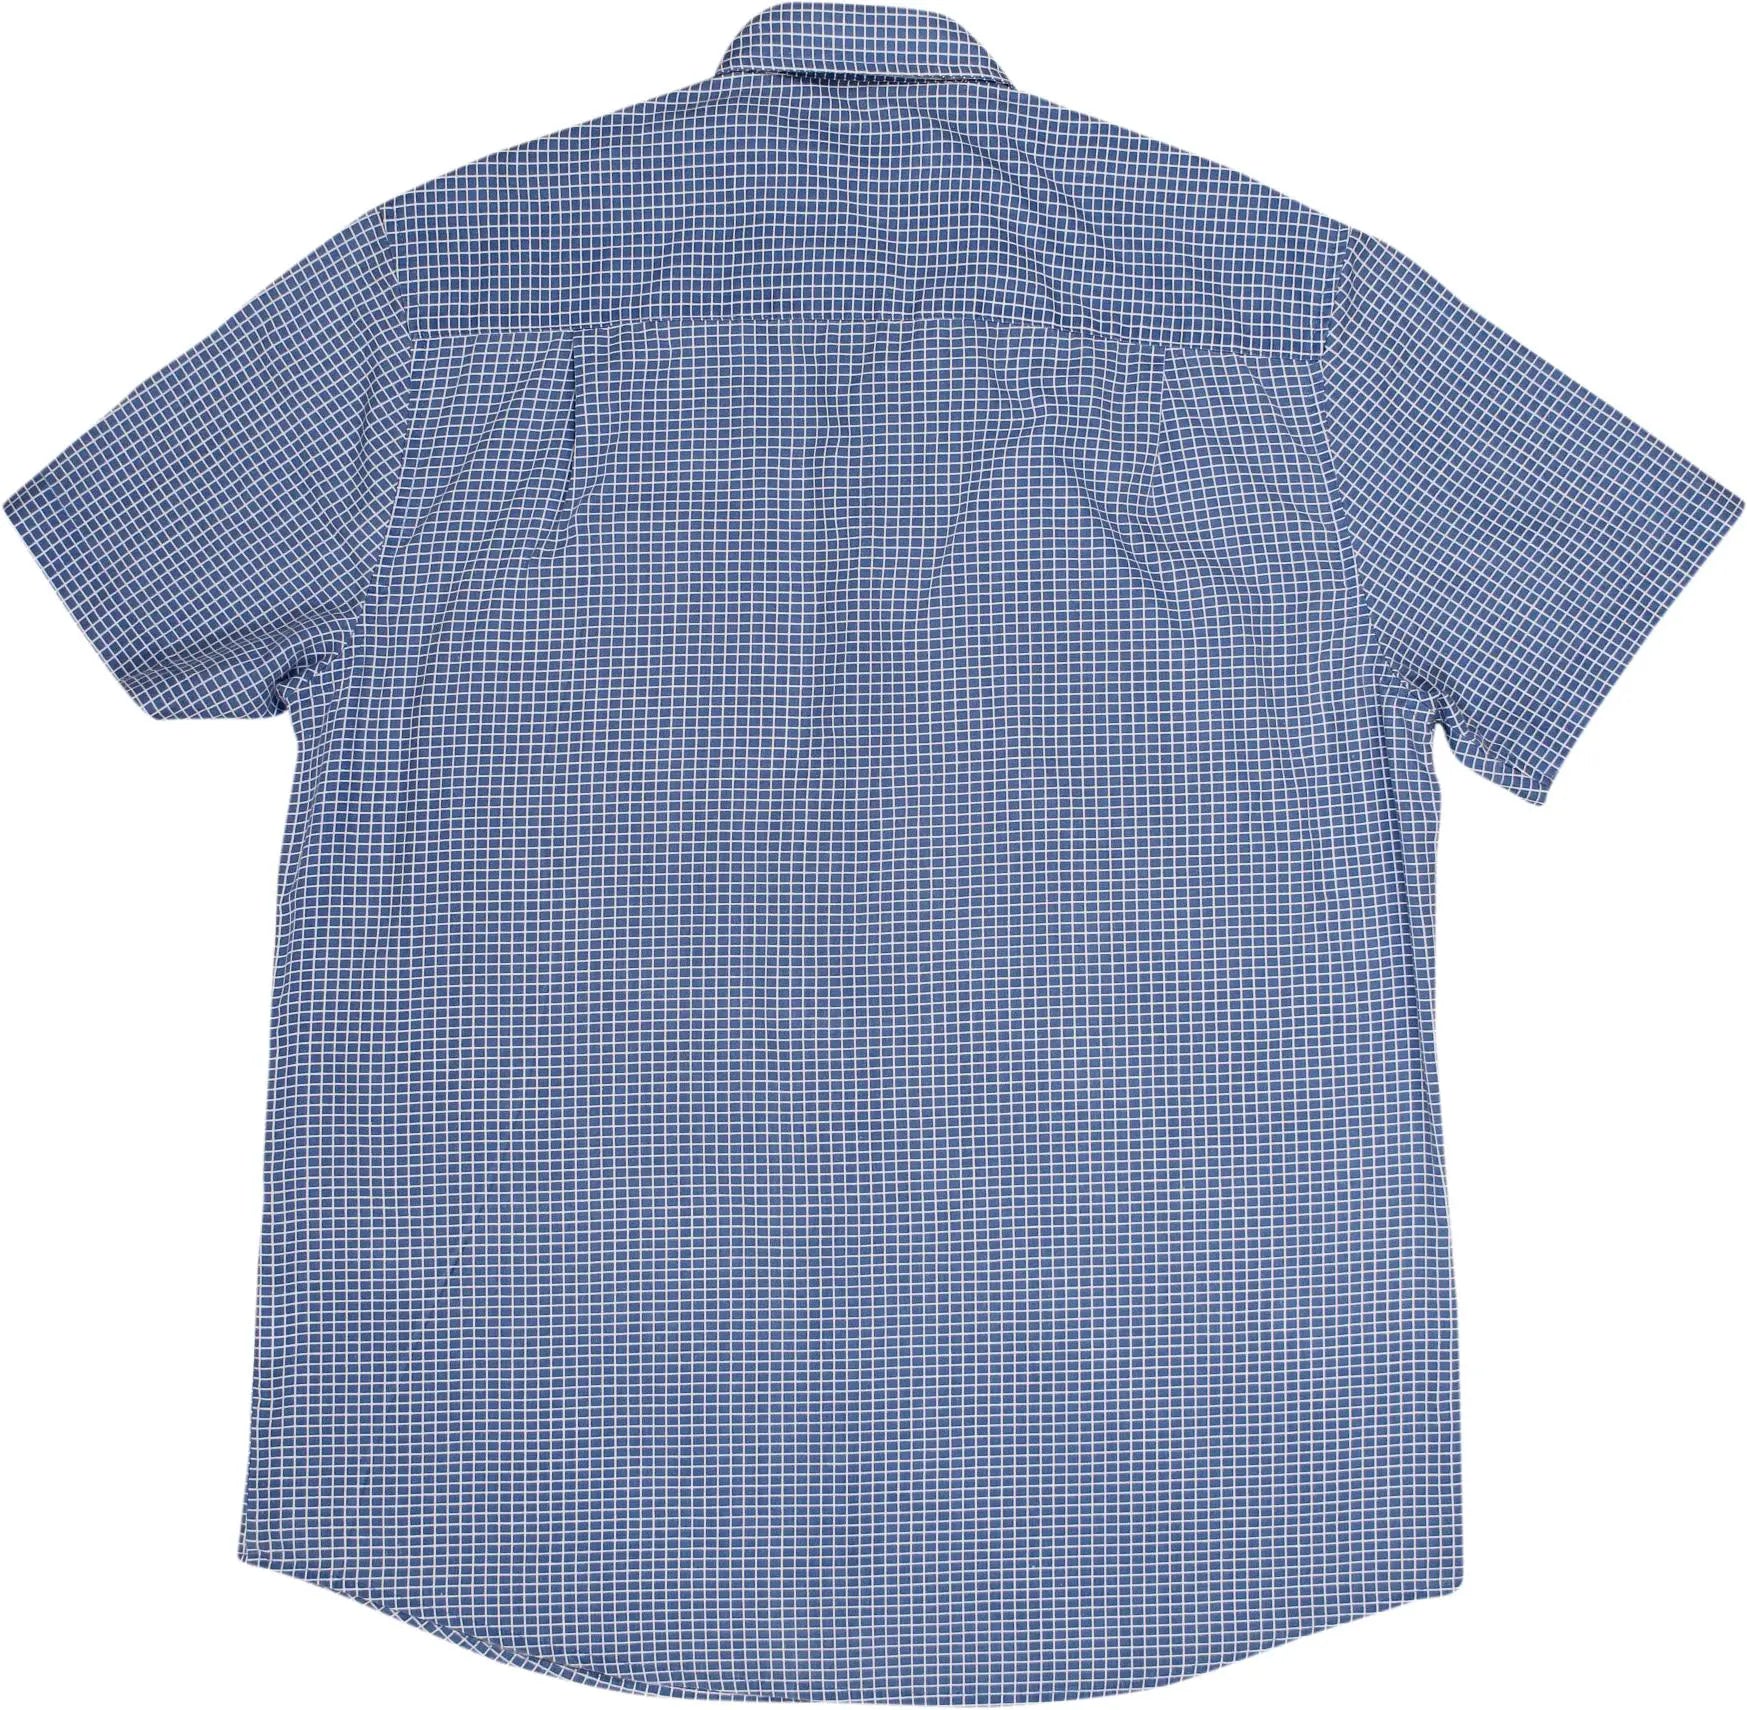 Portonova - BLUE2473- ThriftTale.com - Vintage and second handclothing